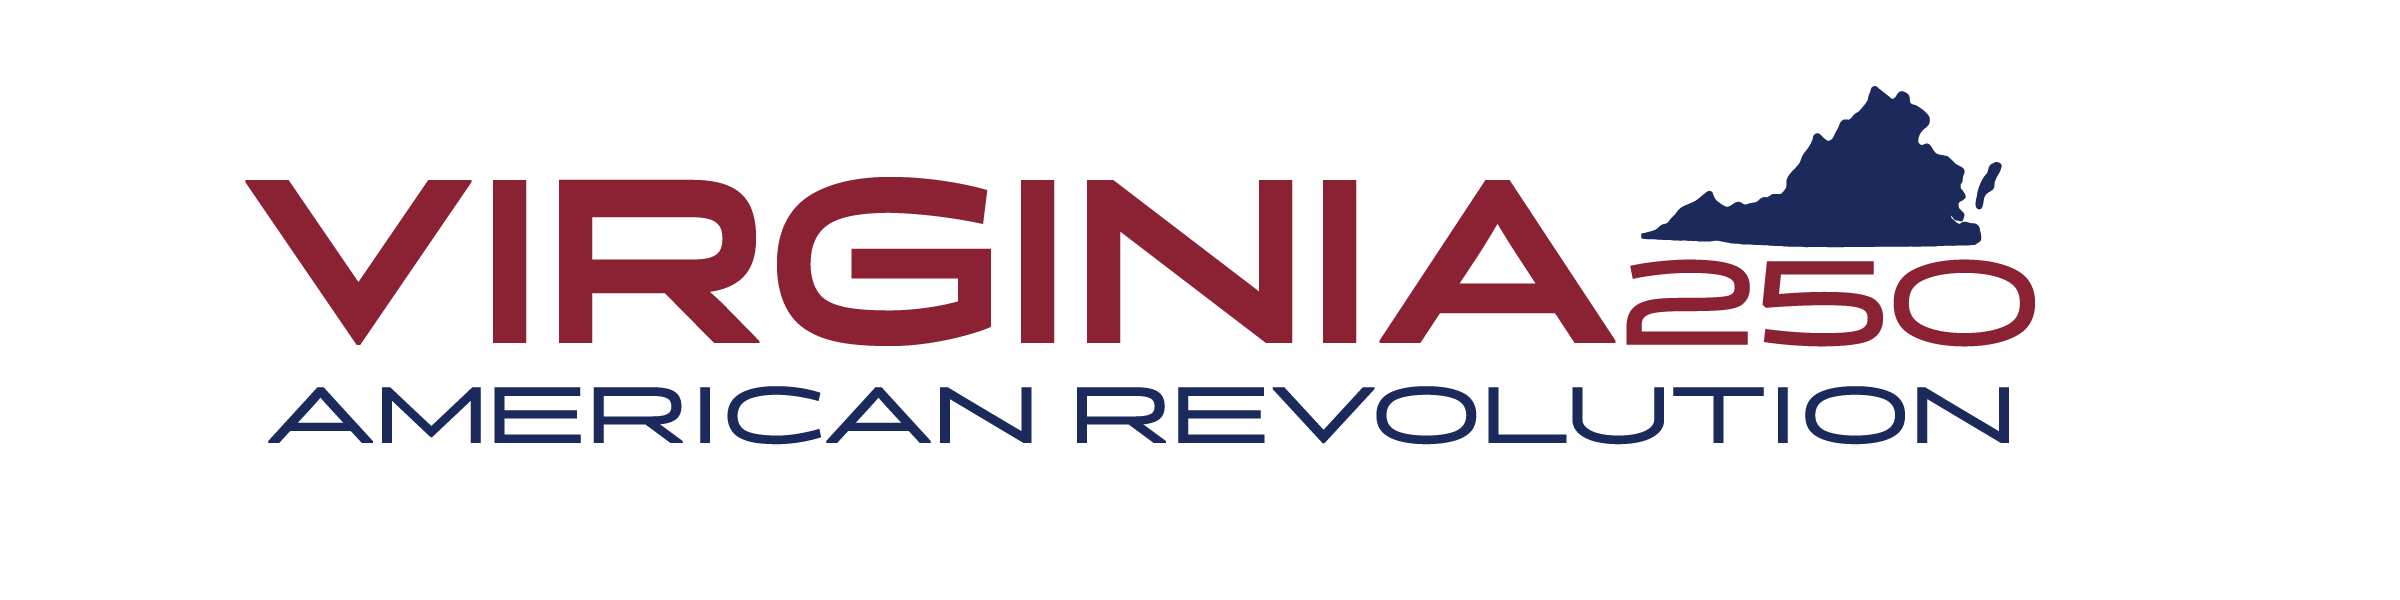 Virginia American Revolution 250 Commission logo